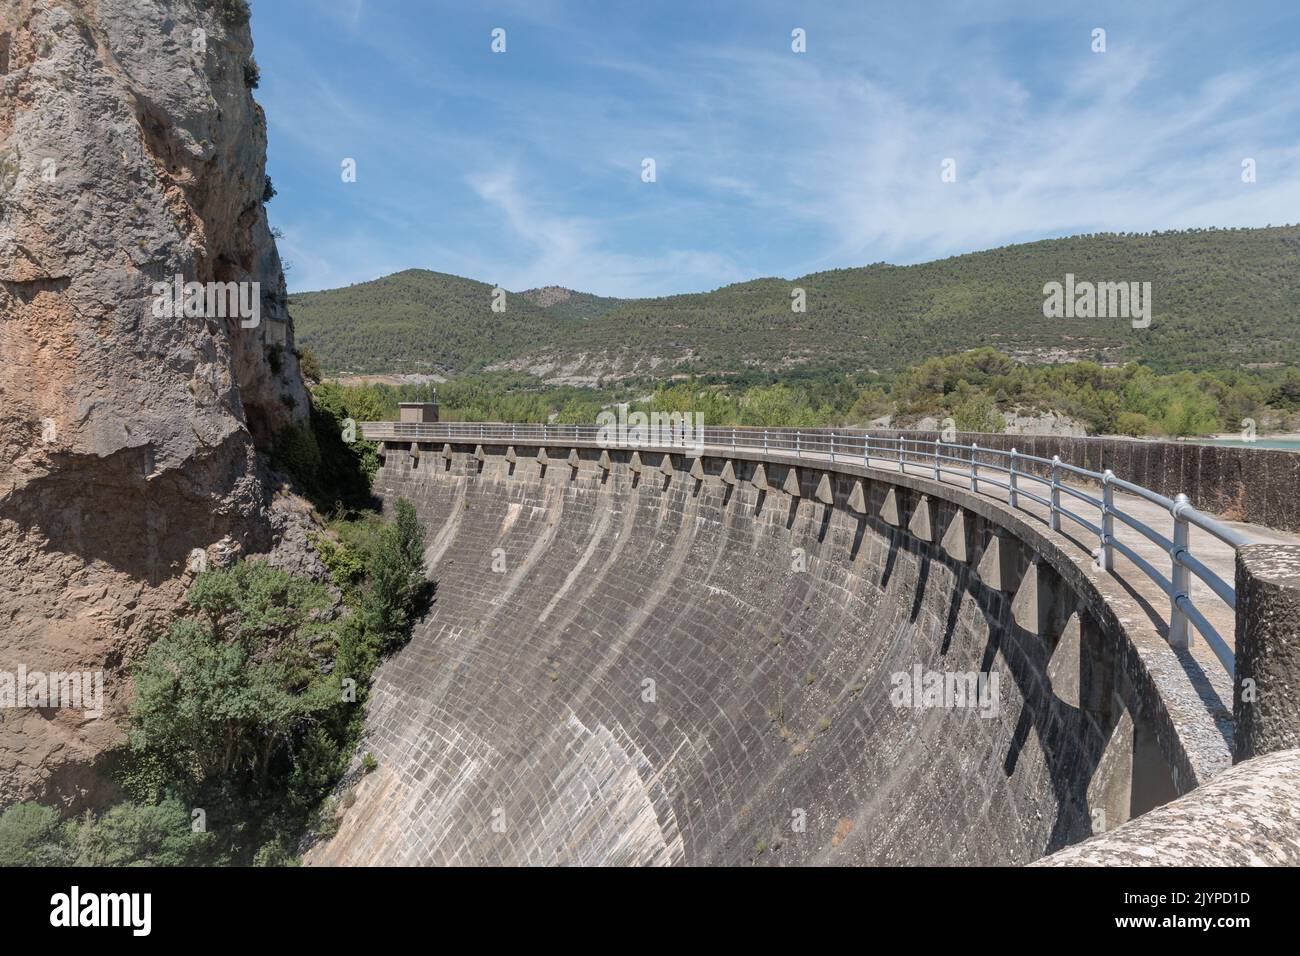 Dam of the La Pena reservoir, Aragon, Spain Stock Photo